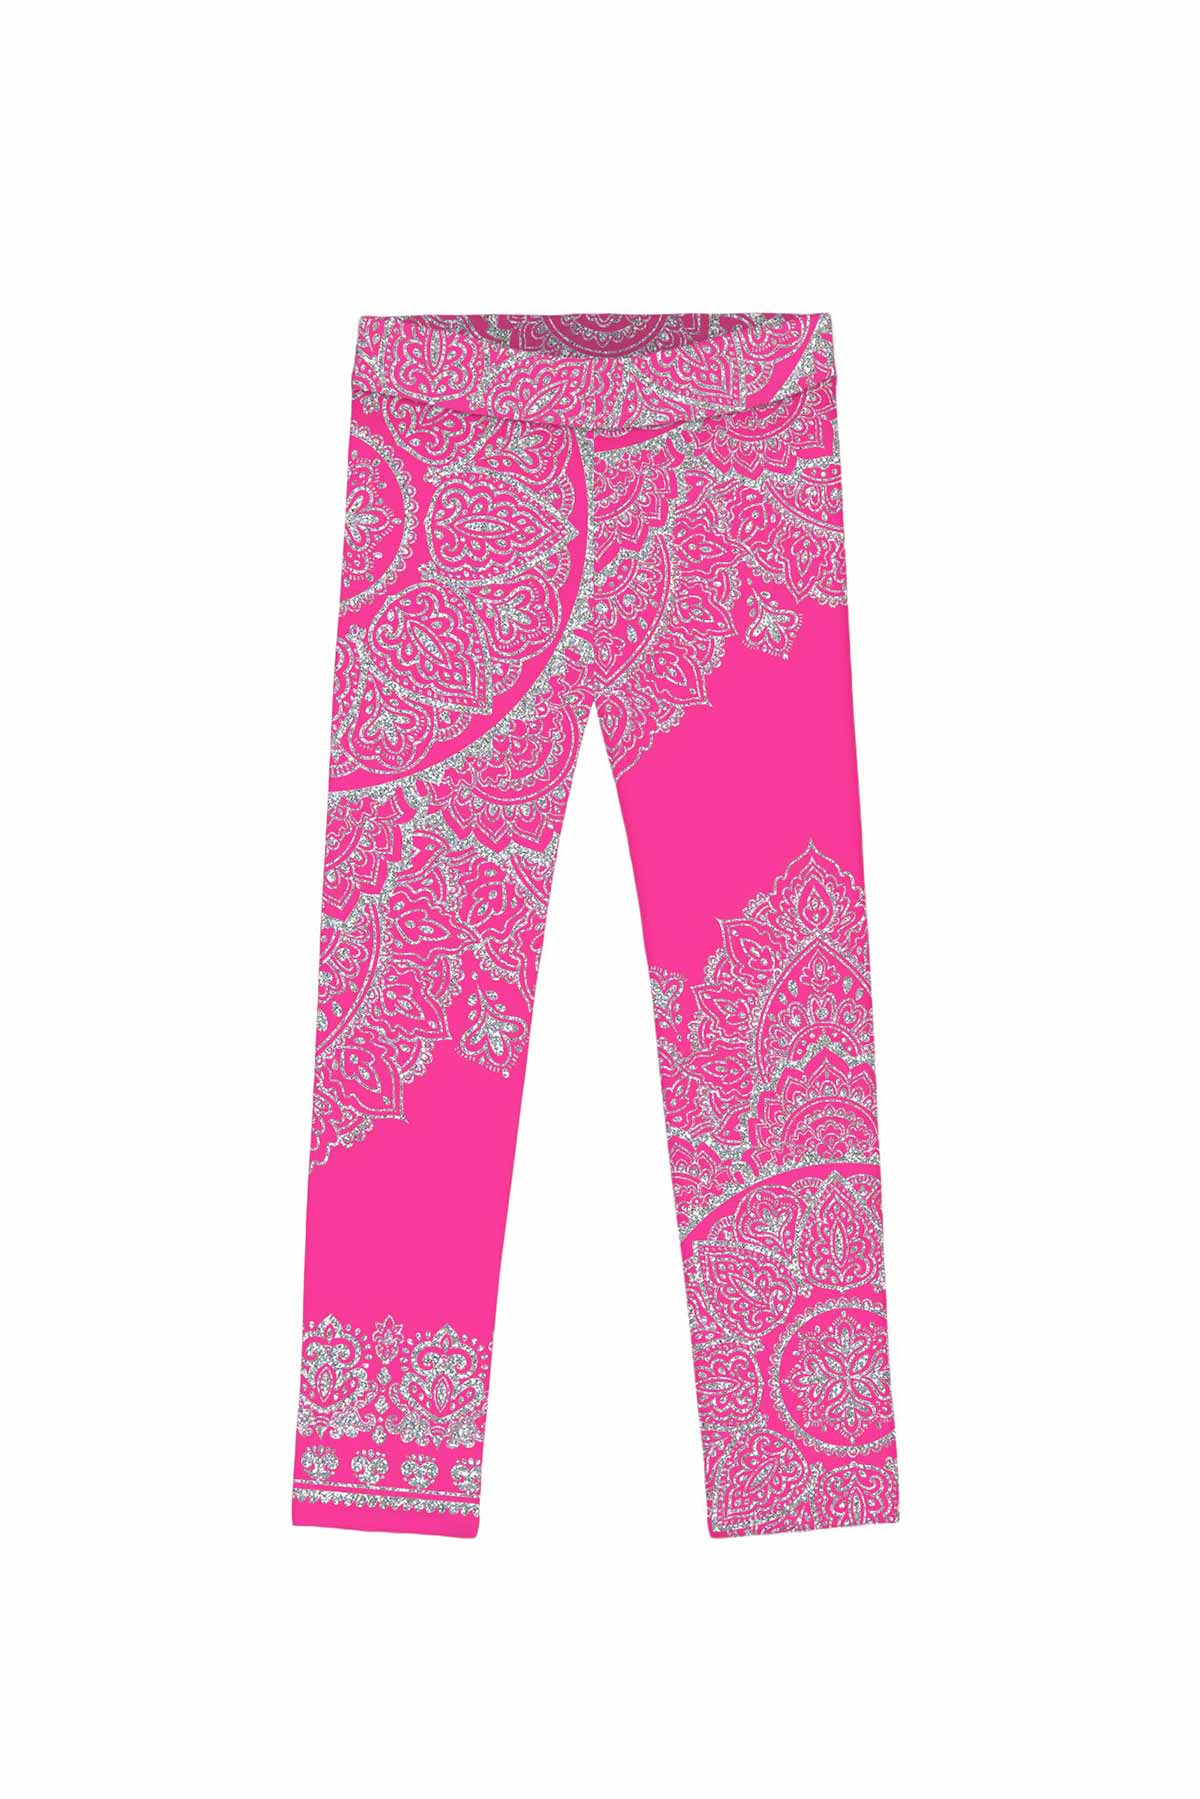 Lipstick Nirvana Lucy Pink Geometric Boho Print Trendy Leggings - Kids - Pineapple Clothing